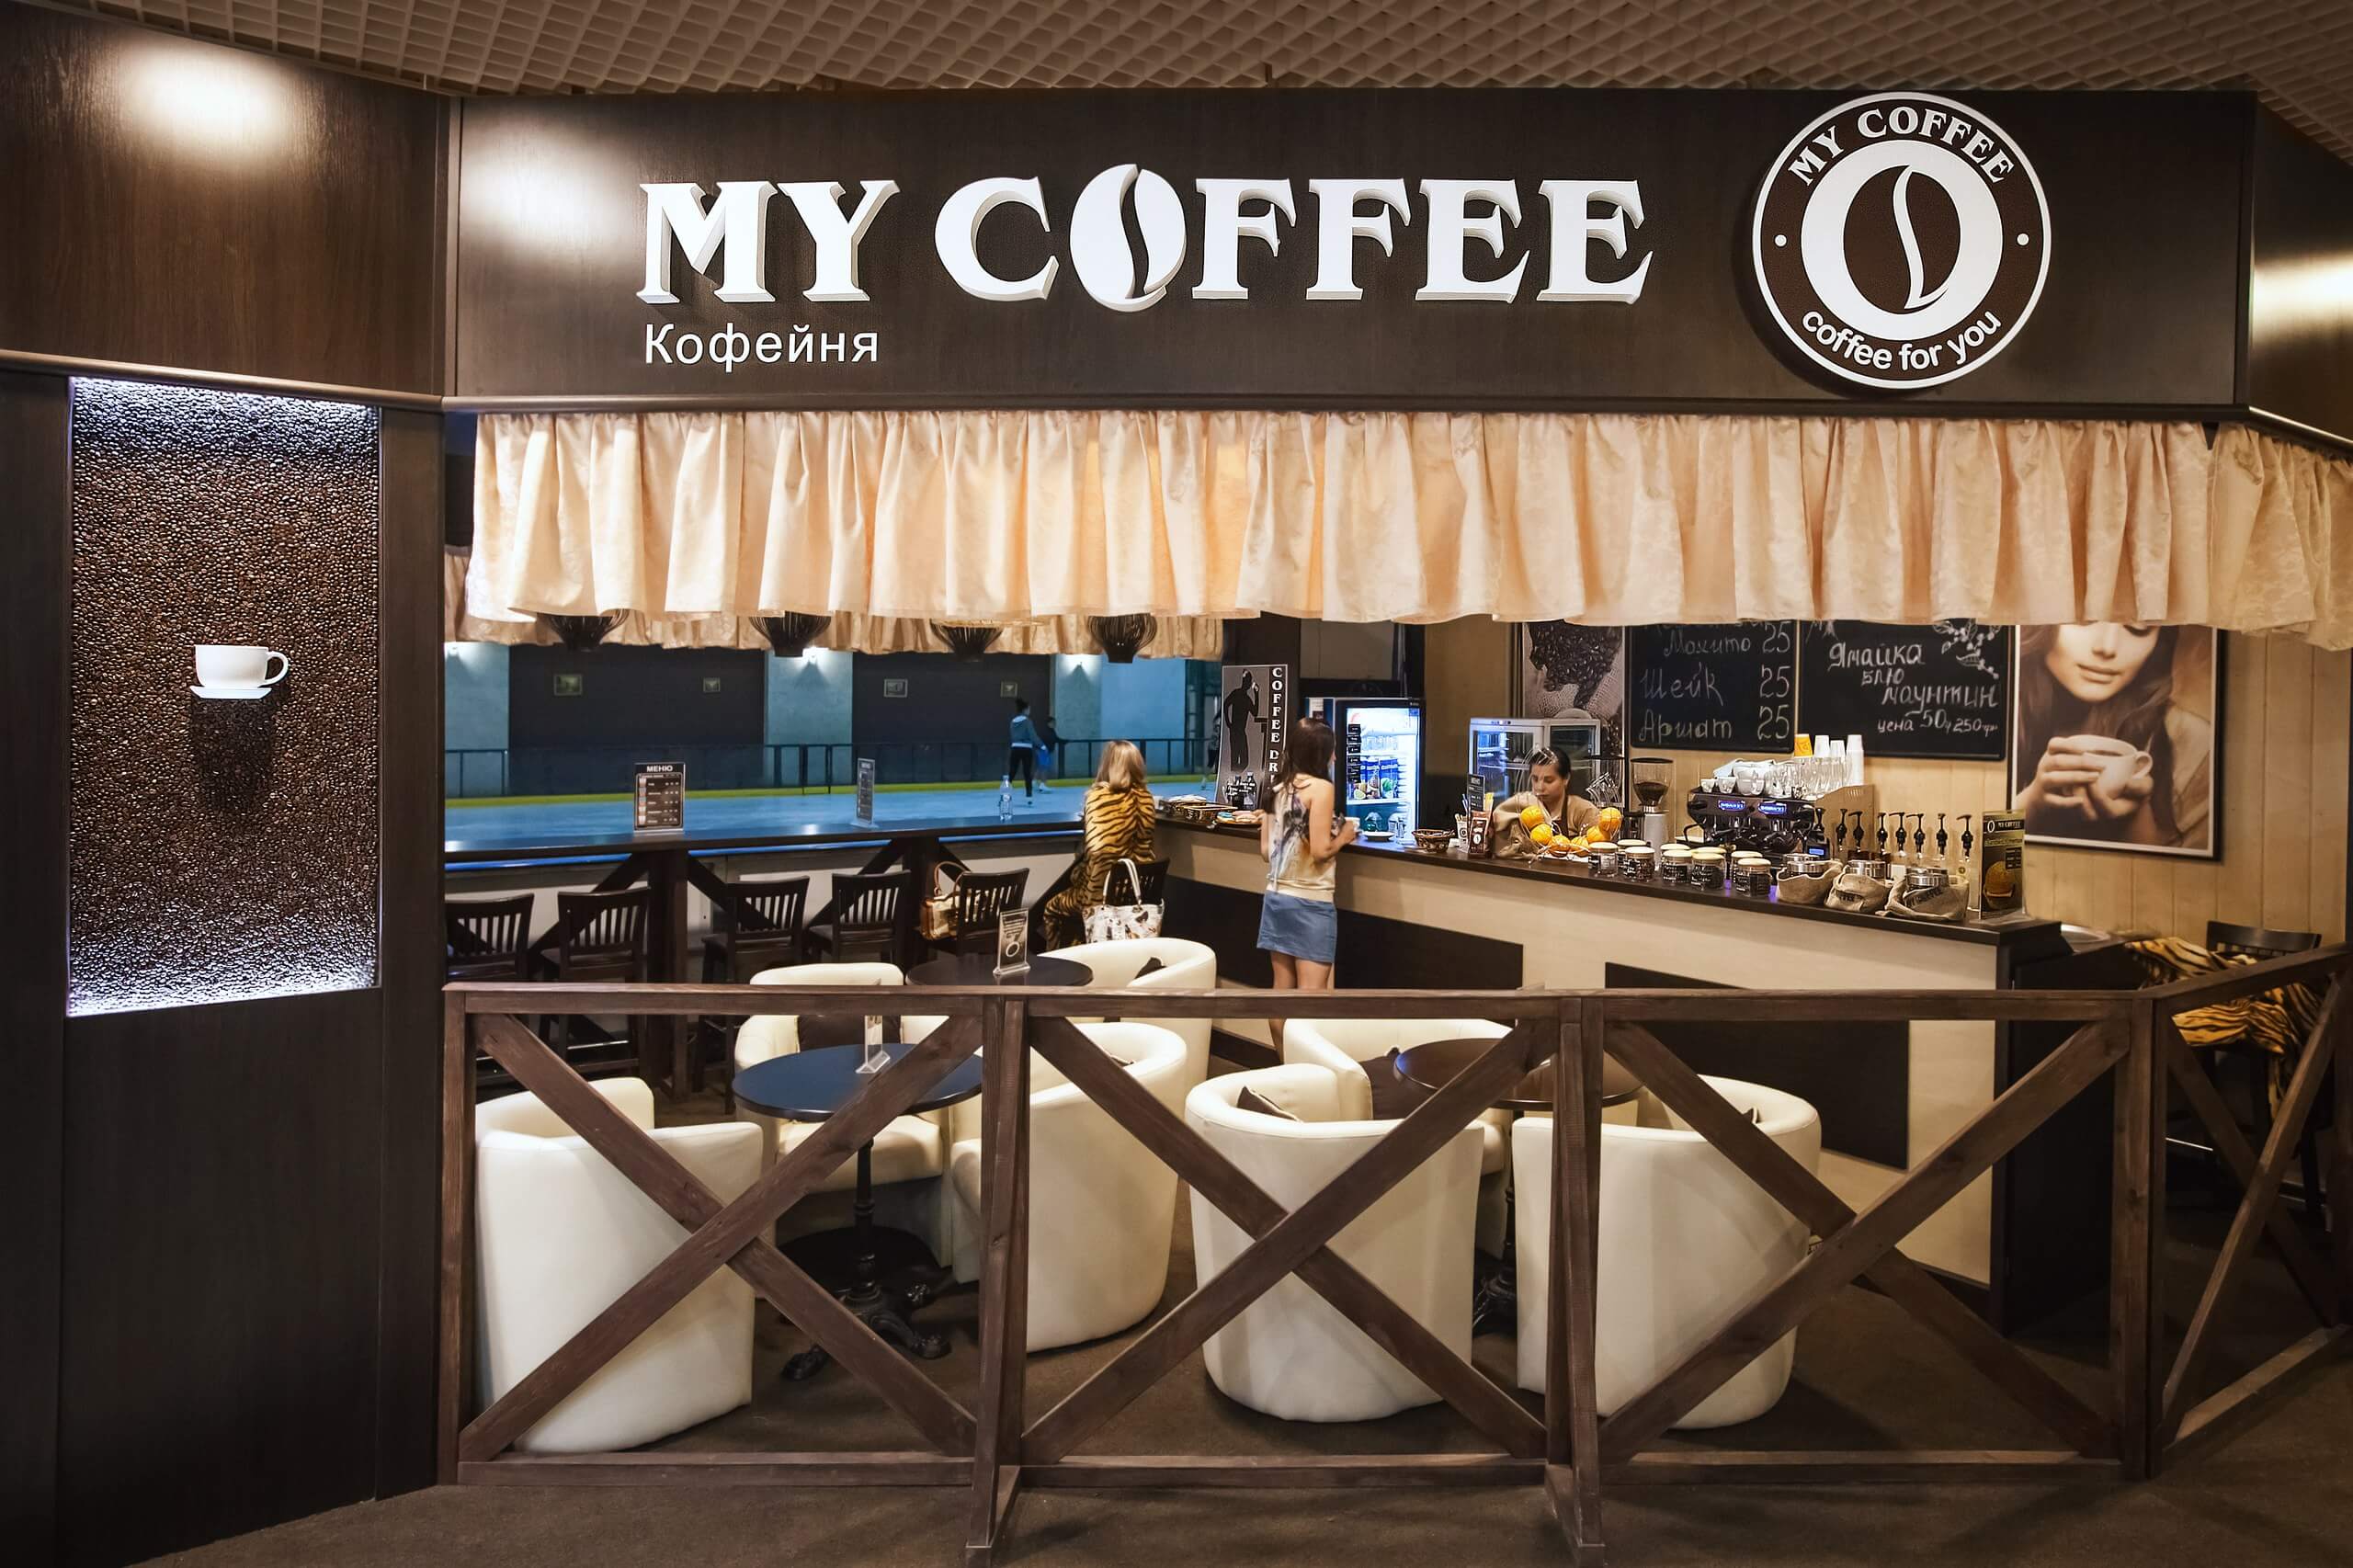 Франшиза кофеен: бизнес с ароматом кофе